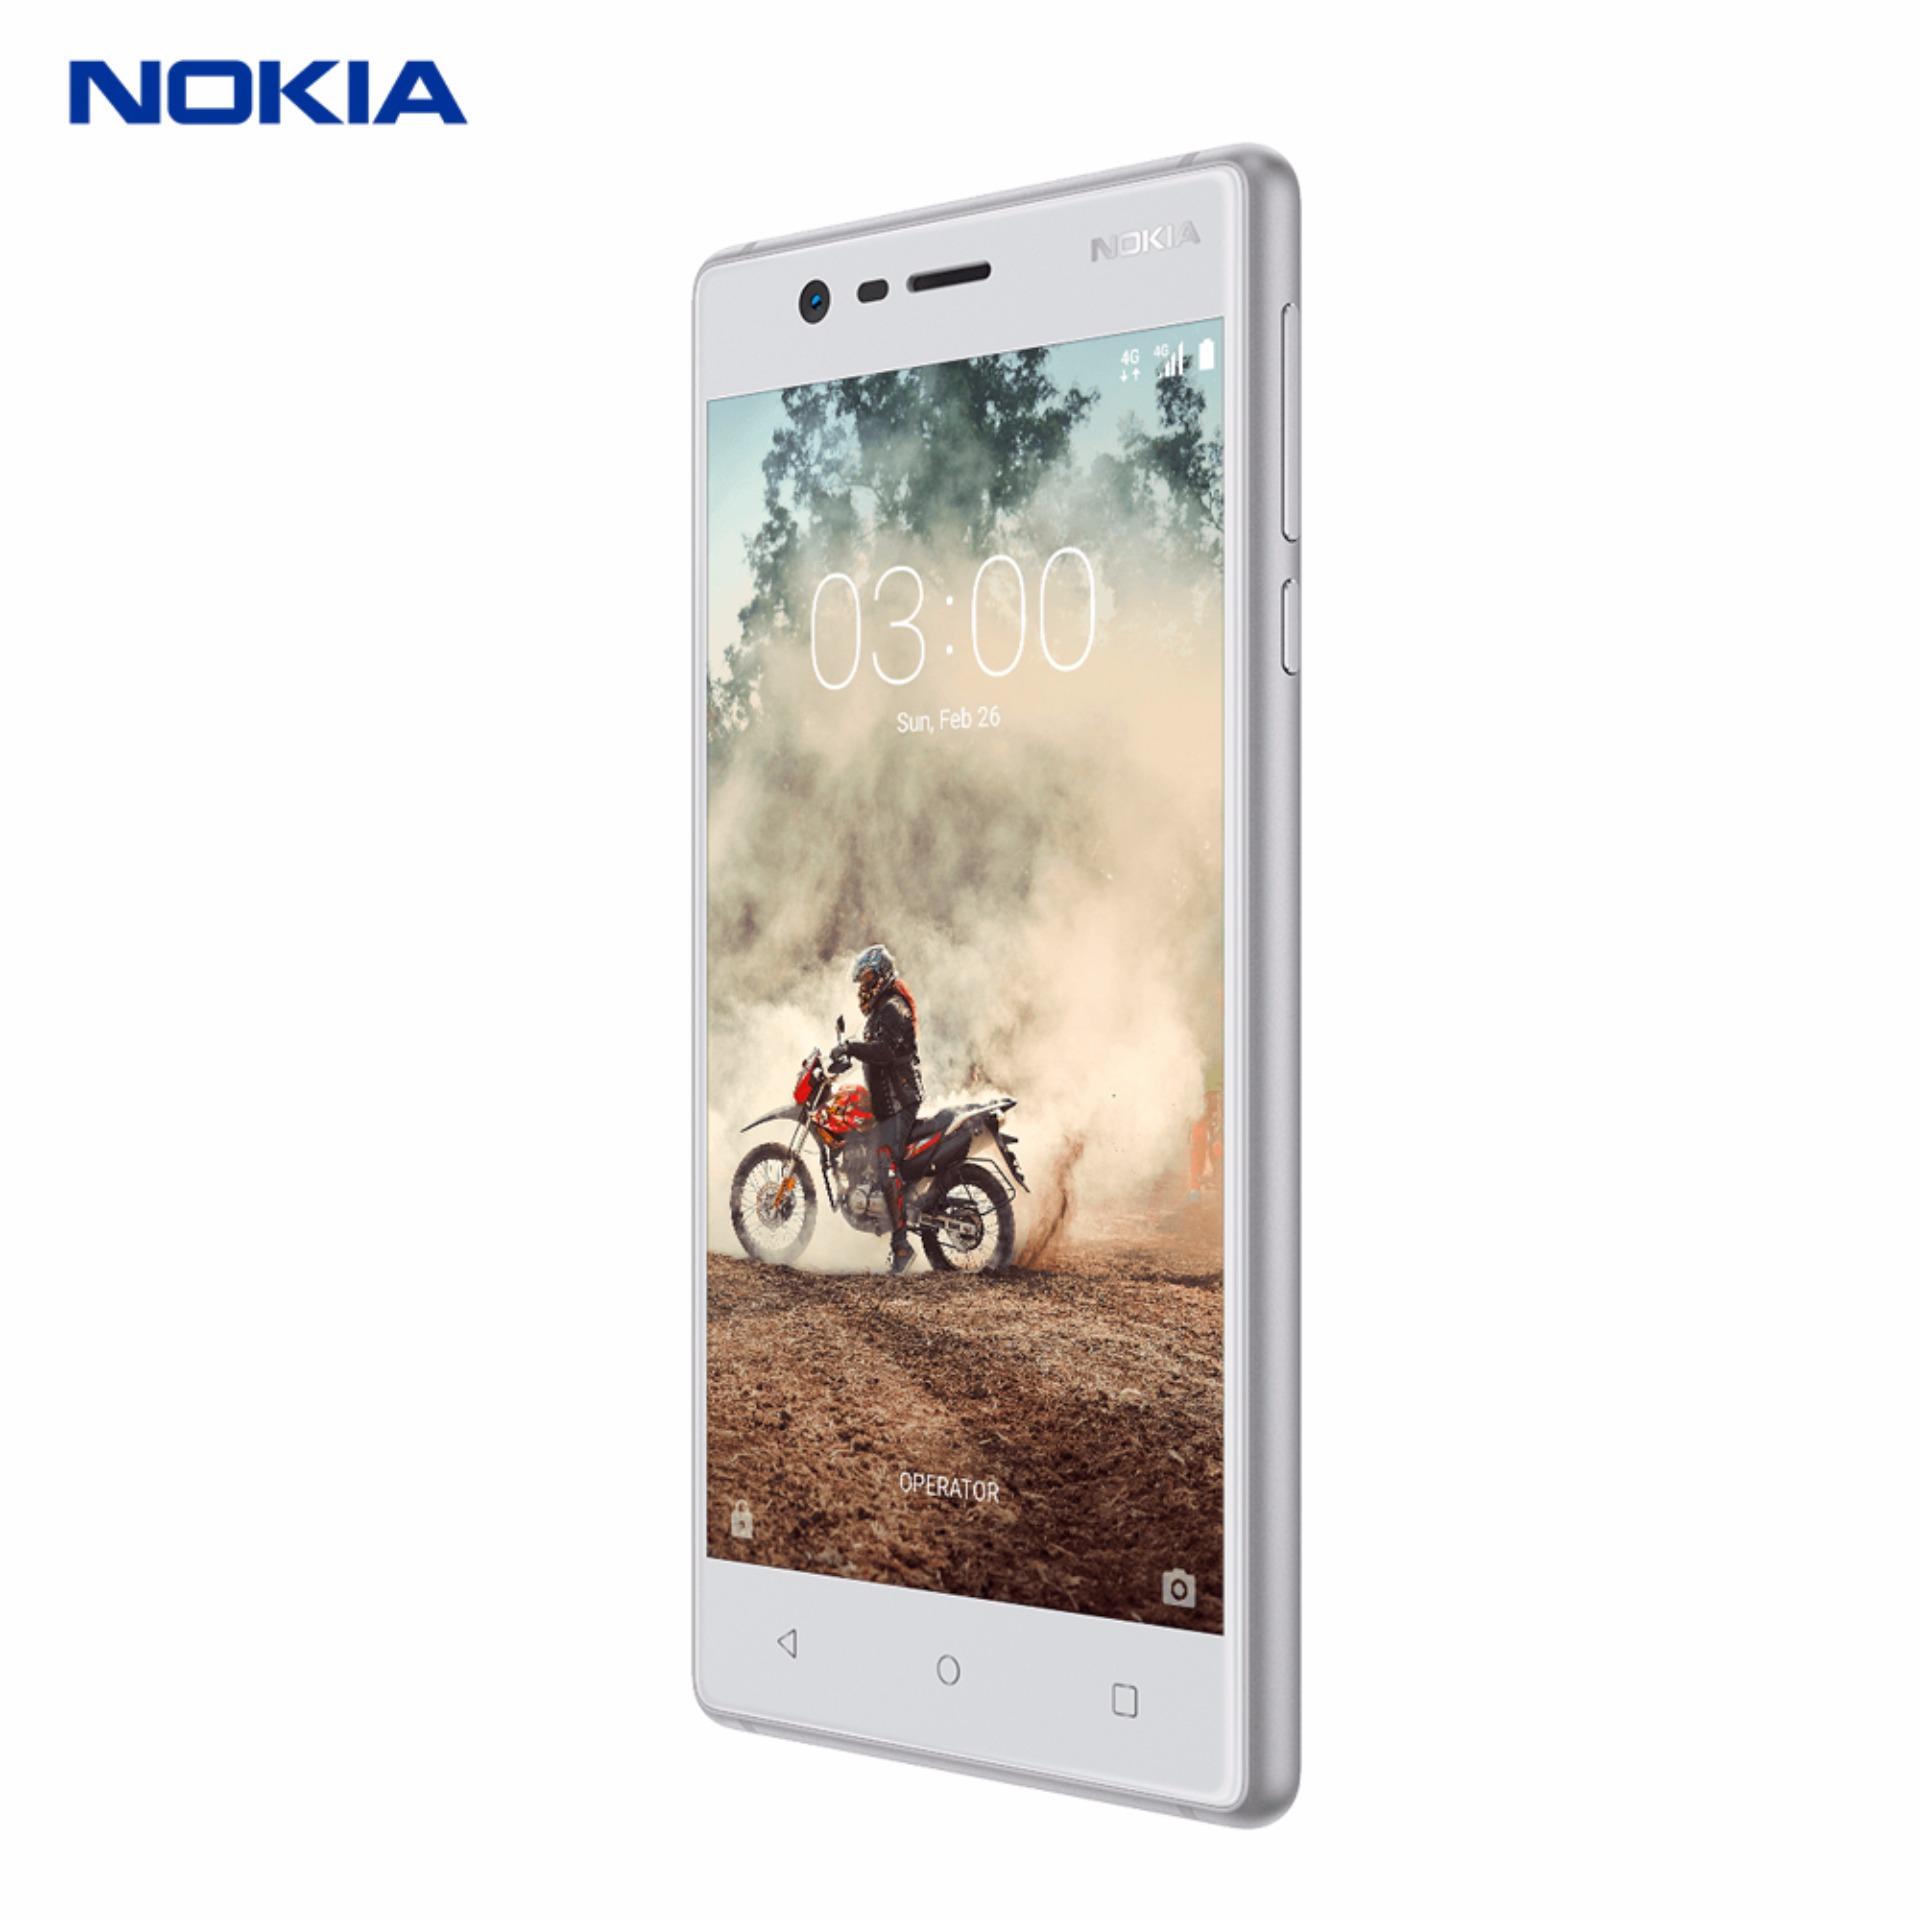 Nokia 3 16GB Android Dual-SIM Factory Unlocked 4G/LTE Smartphone (Silver White) - International Version